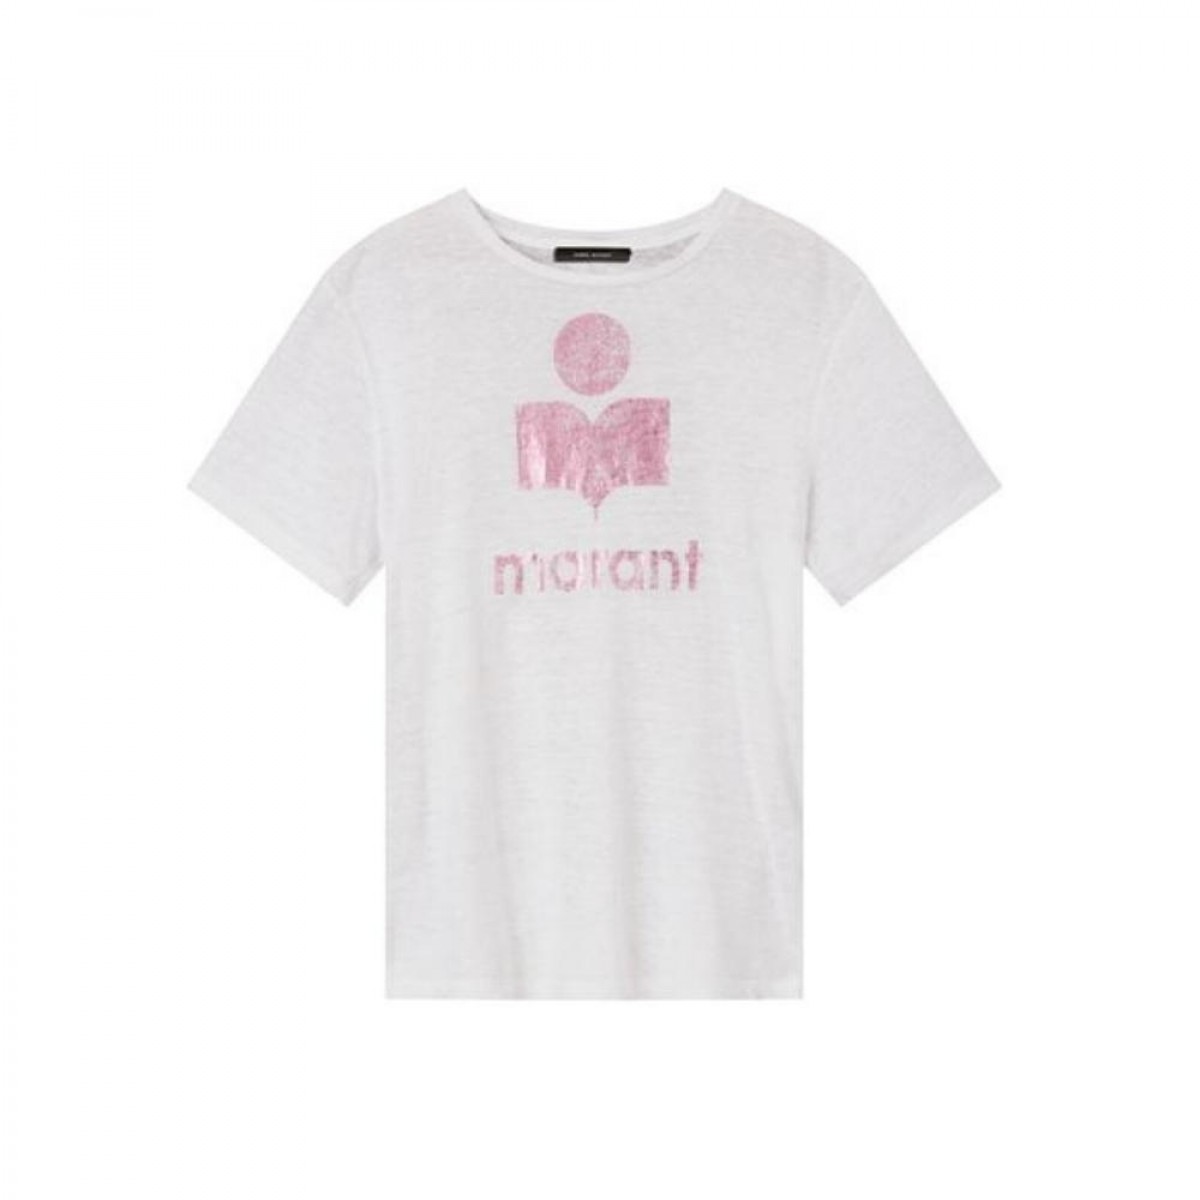 koldi t-shirt - white with pink